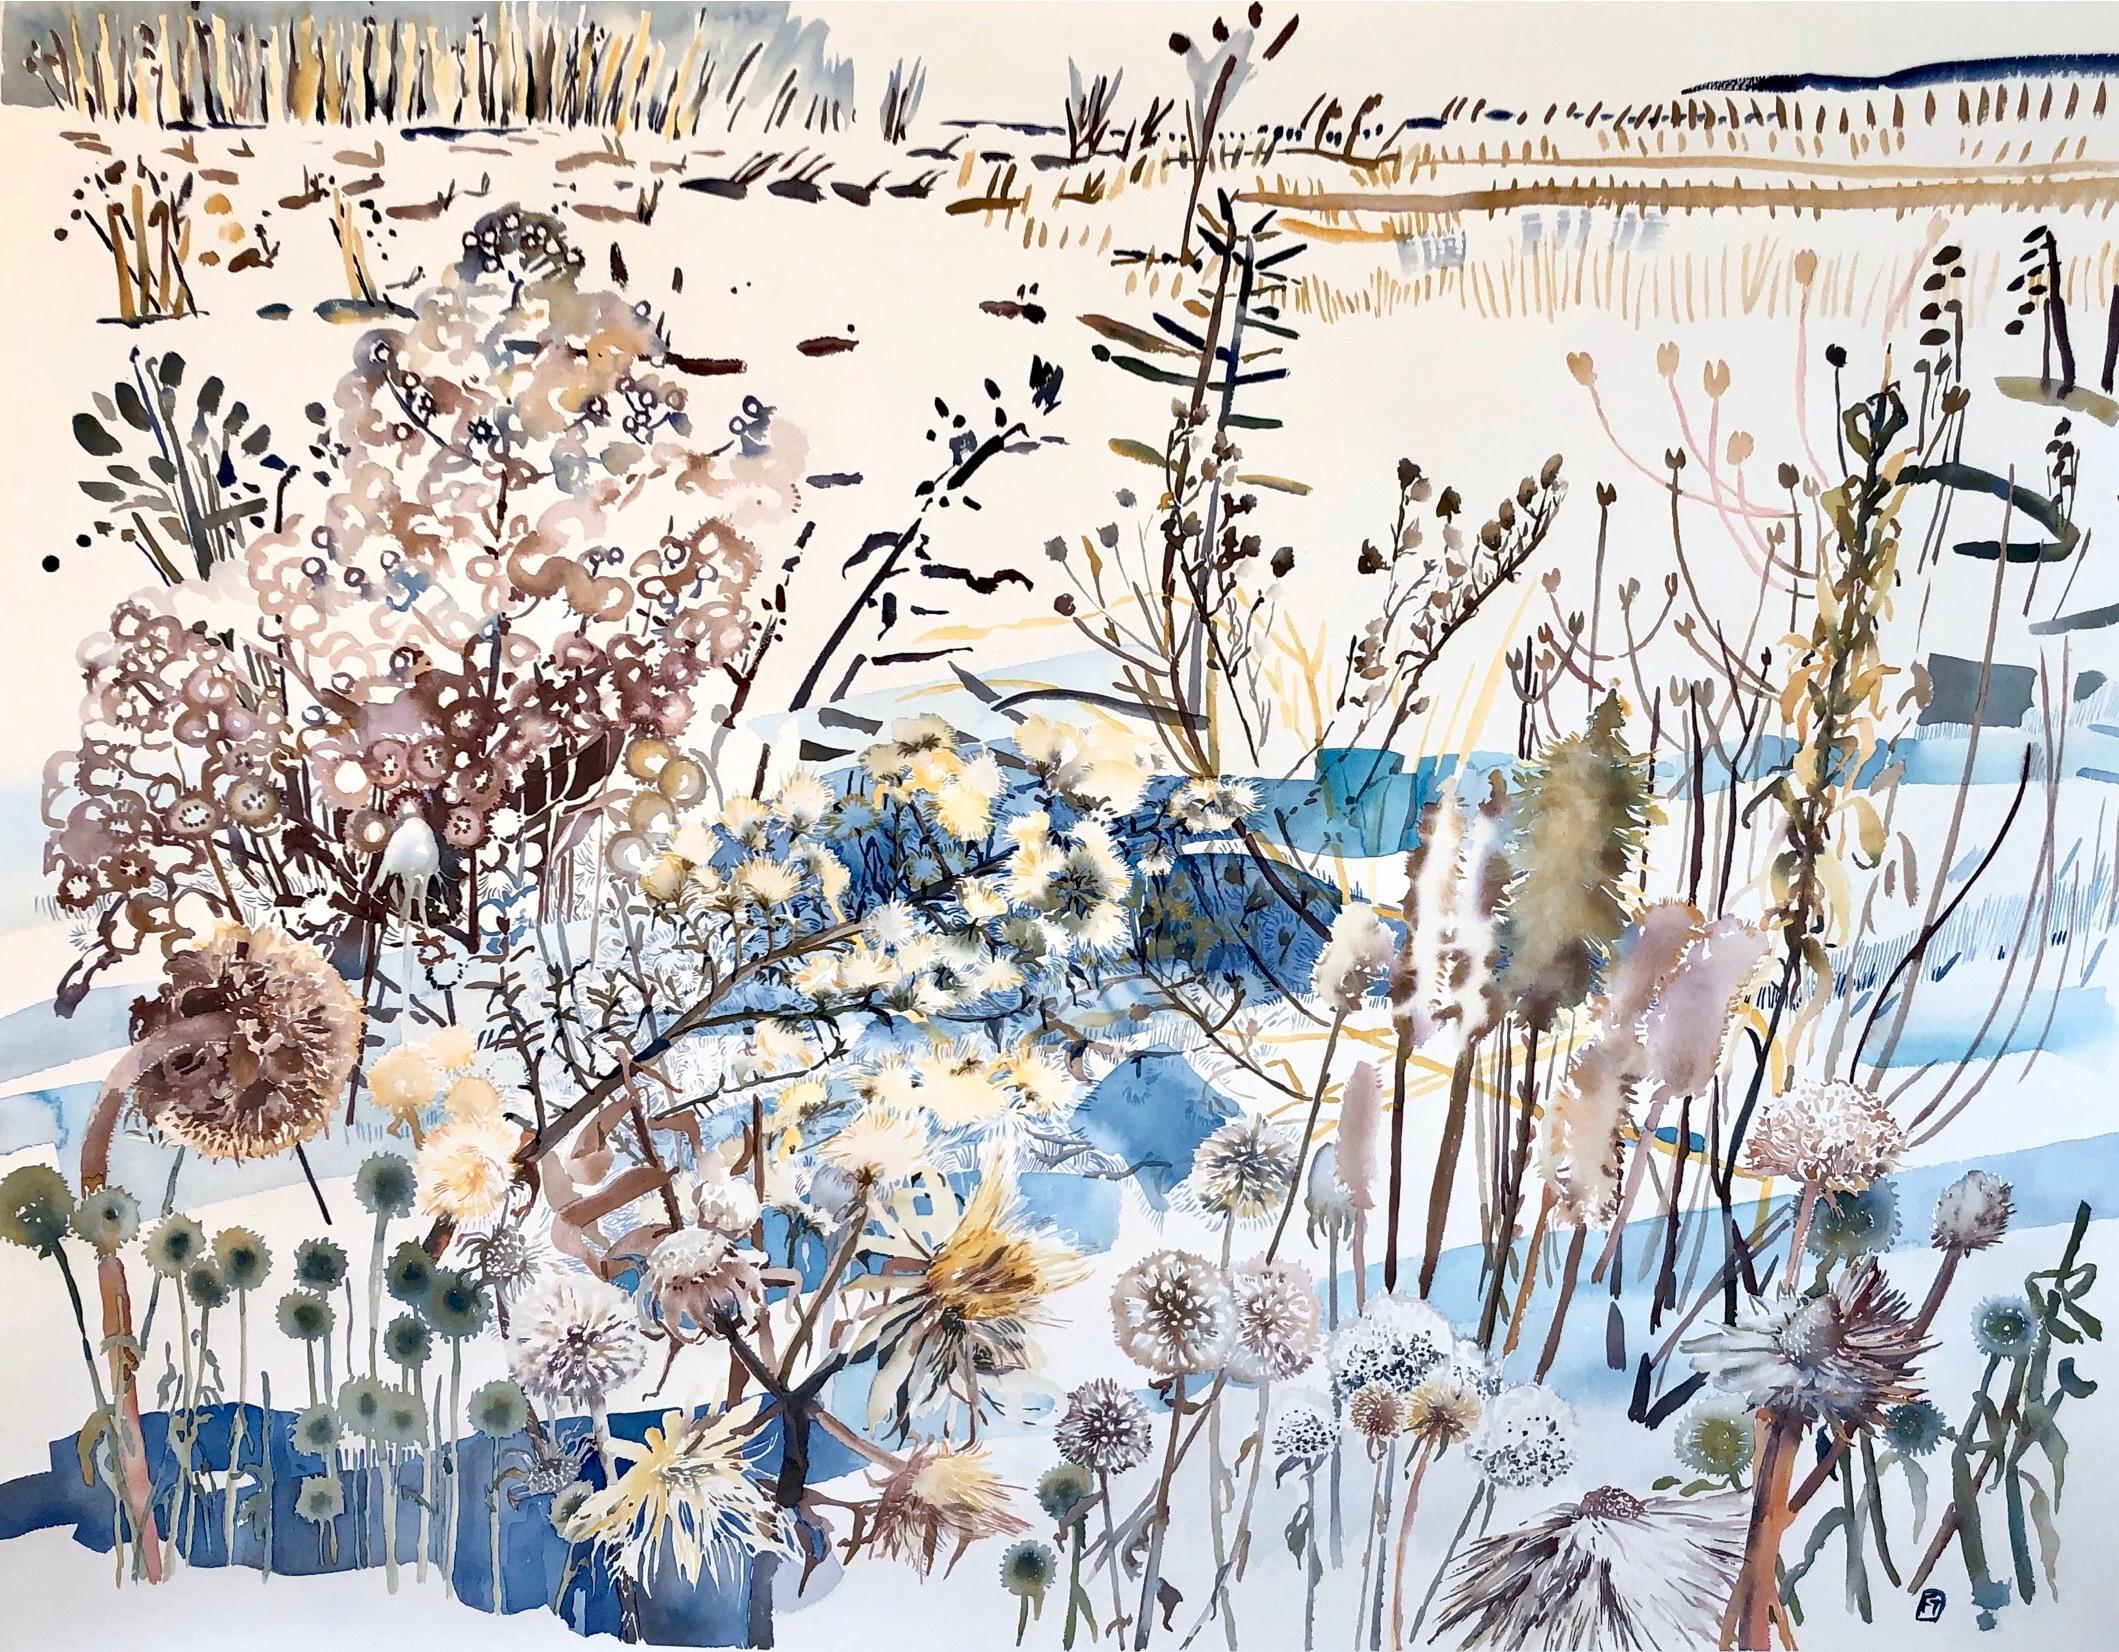 Fleur Thesmar Landscape Art - "WINTER MARSH", watercolor, new england, snow, wild flowers, seeds, water, ice